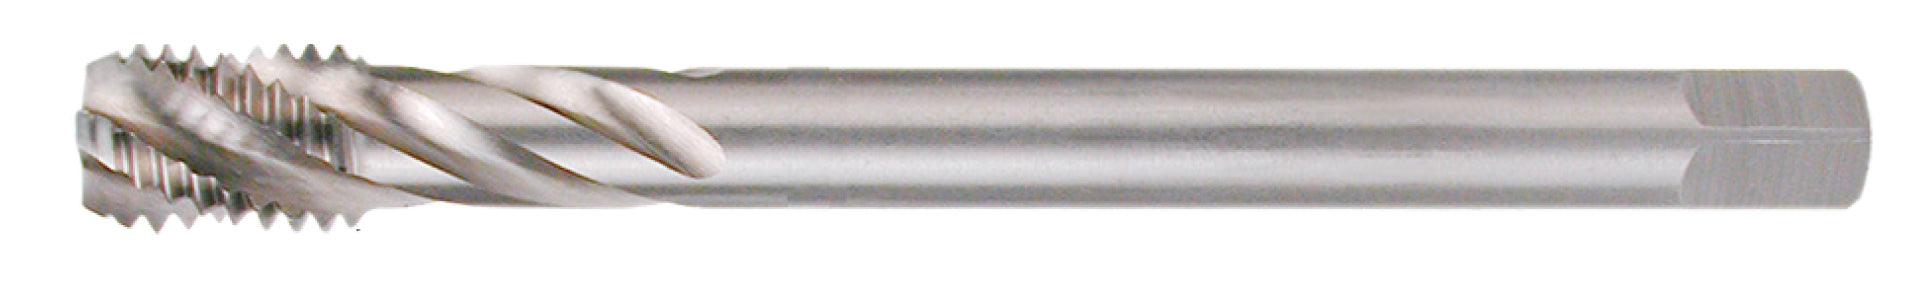 Labor Maschinengewindebohrer geschliffene Sacklöcher M16 HSS DIN376C - SS233160 - Tools.de TP Profishop GmbH